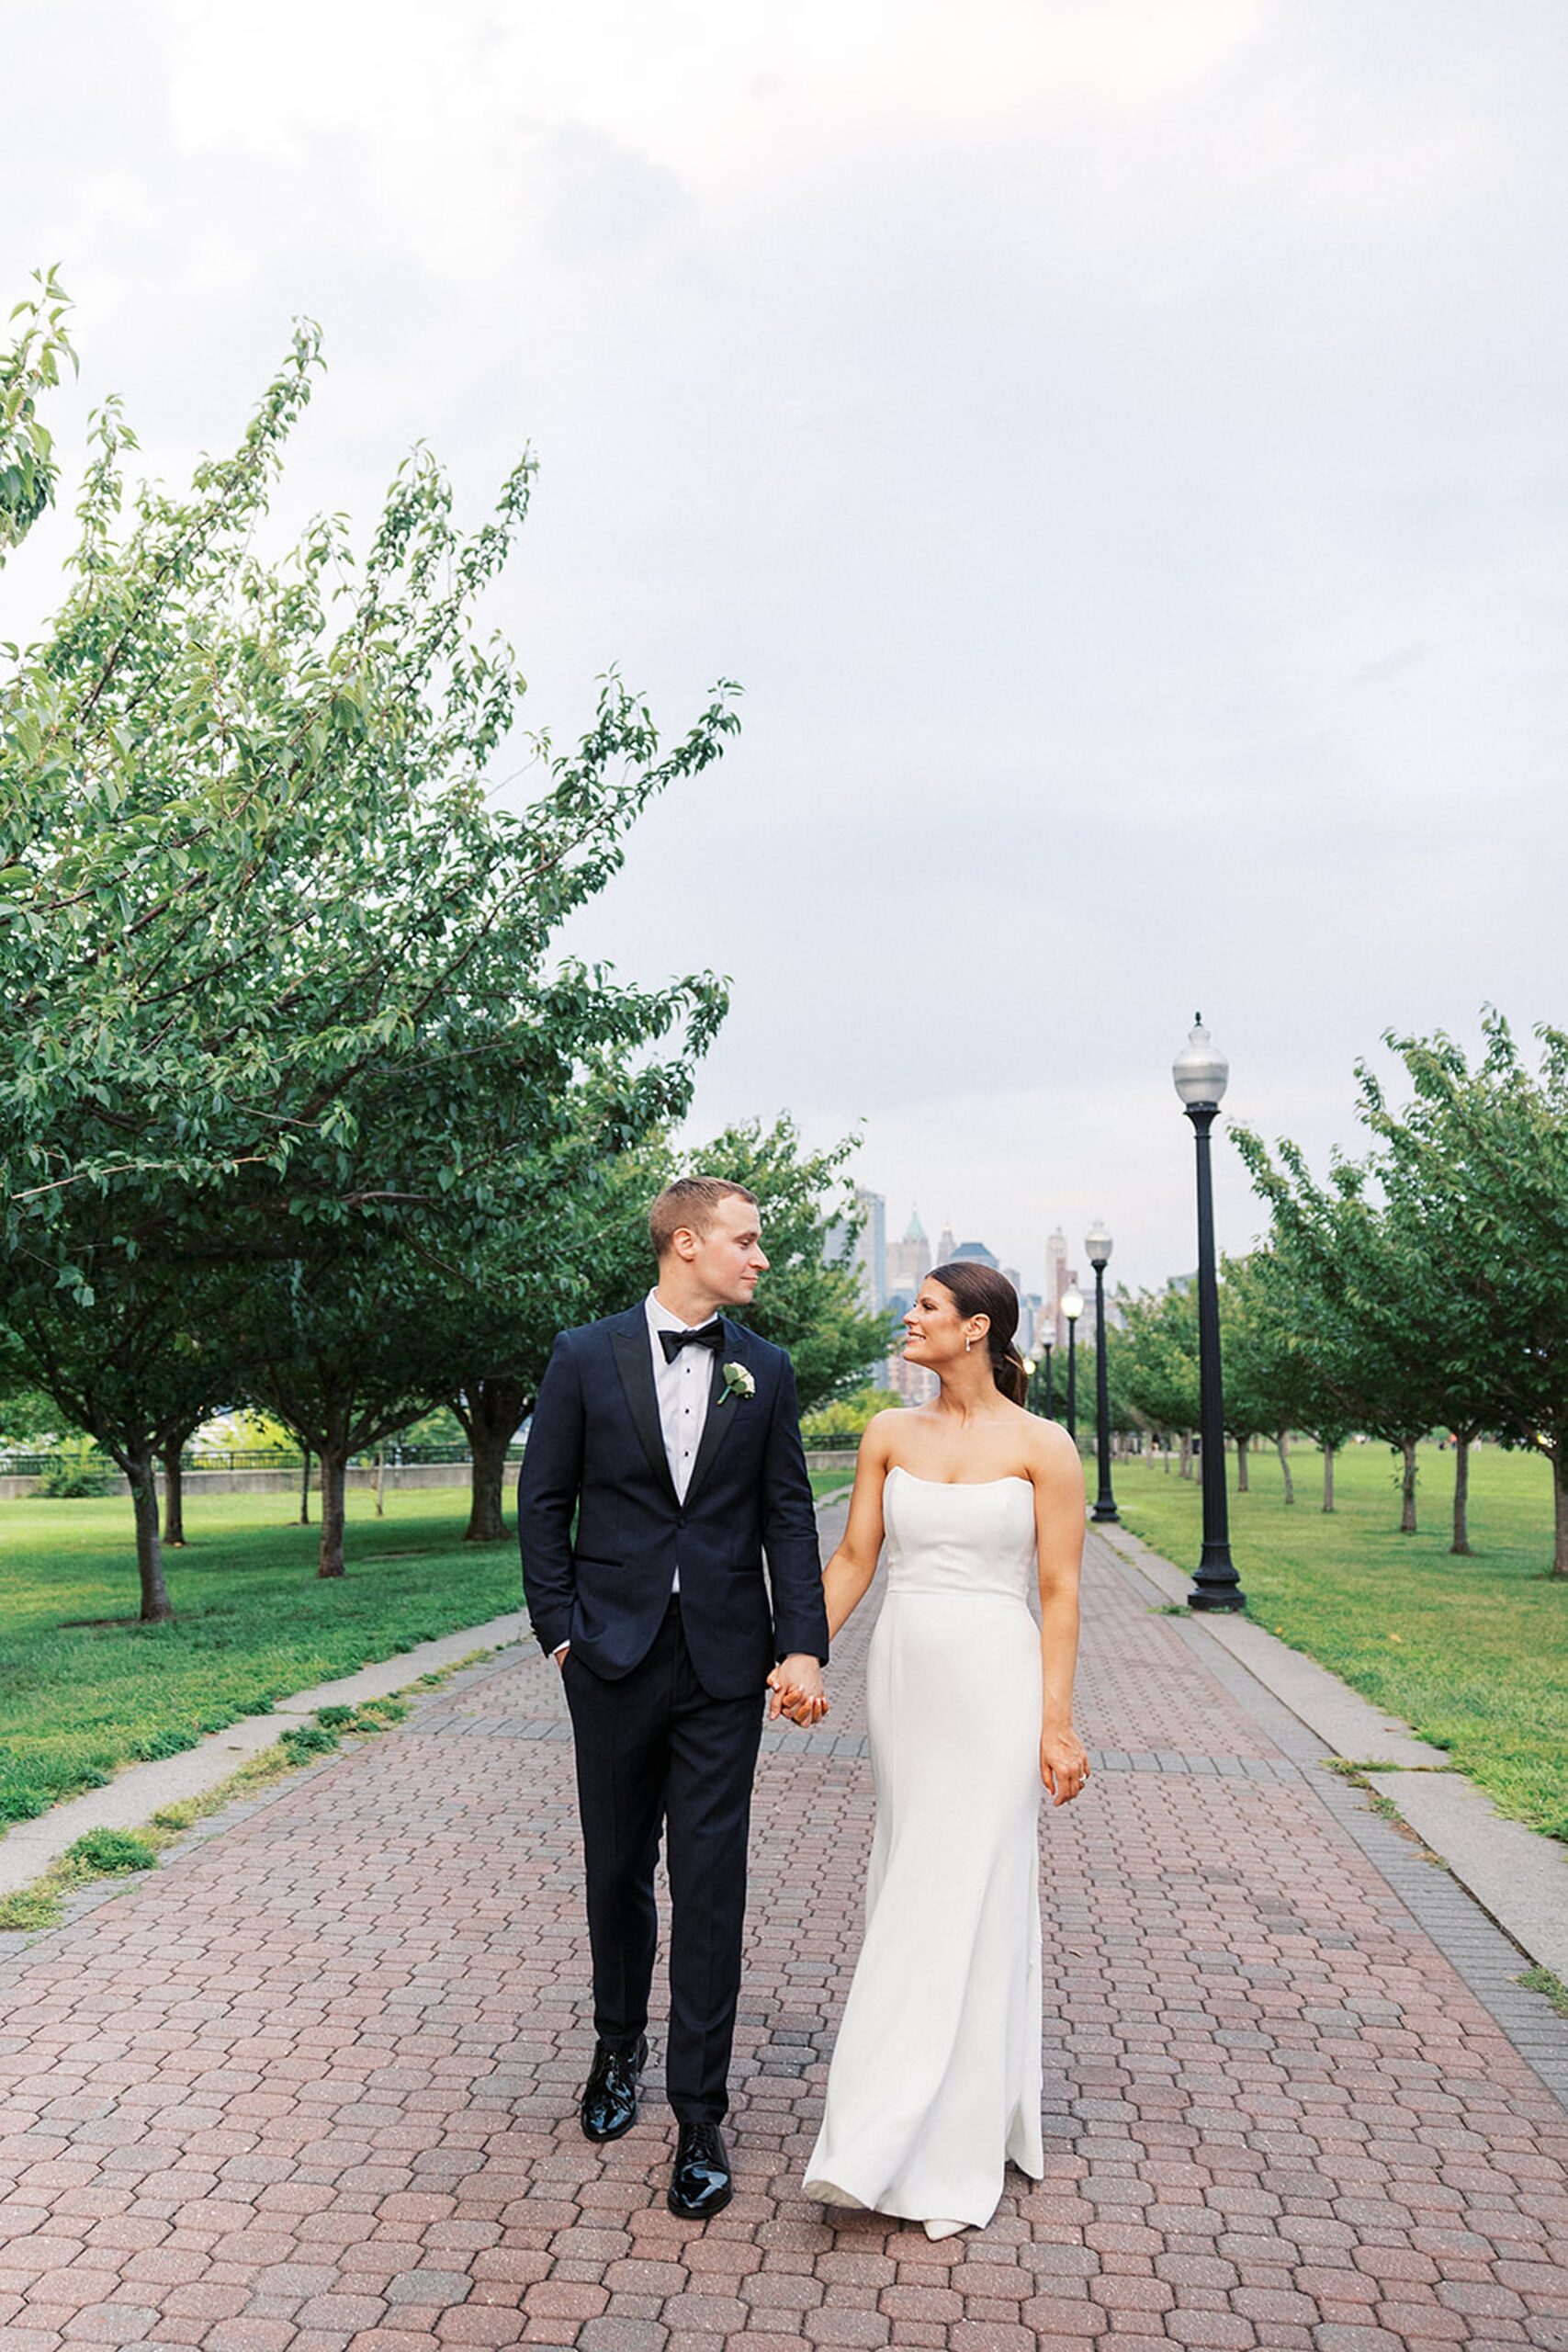 Newlyweds walk holding hands down a brick paved park path